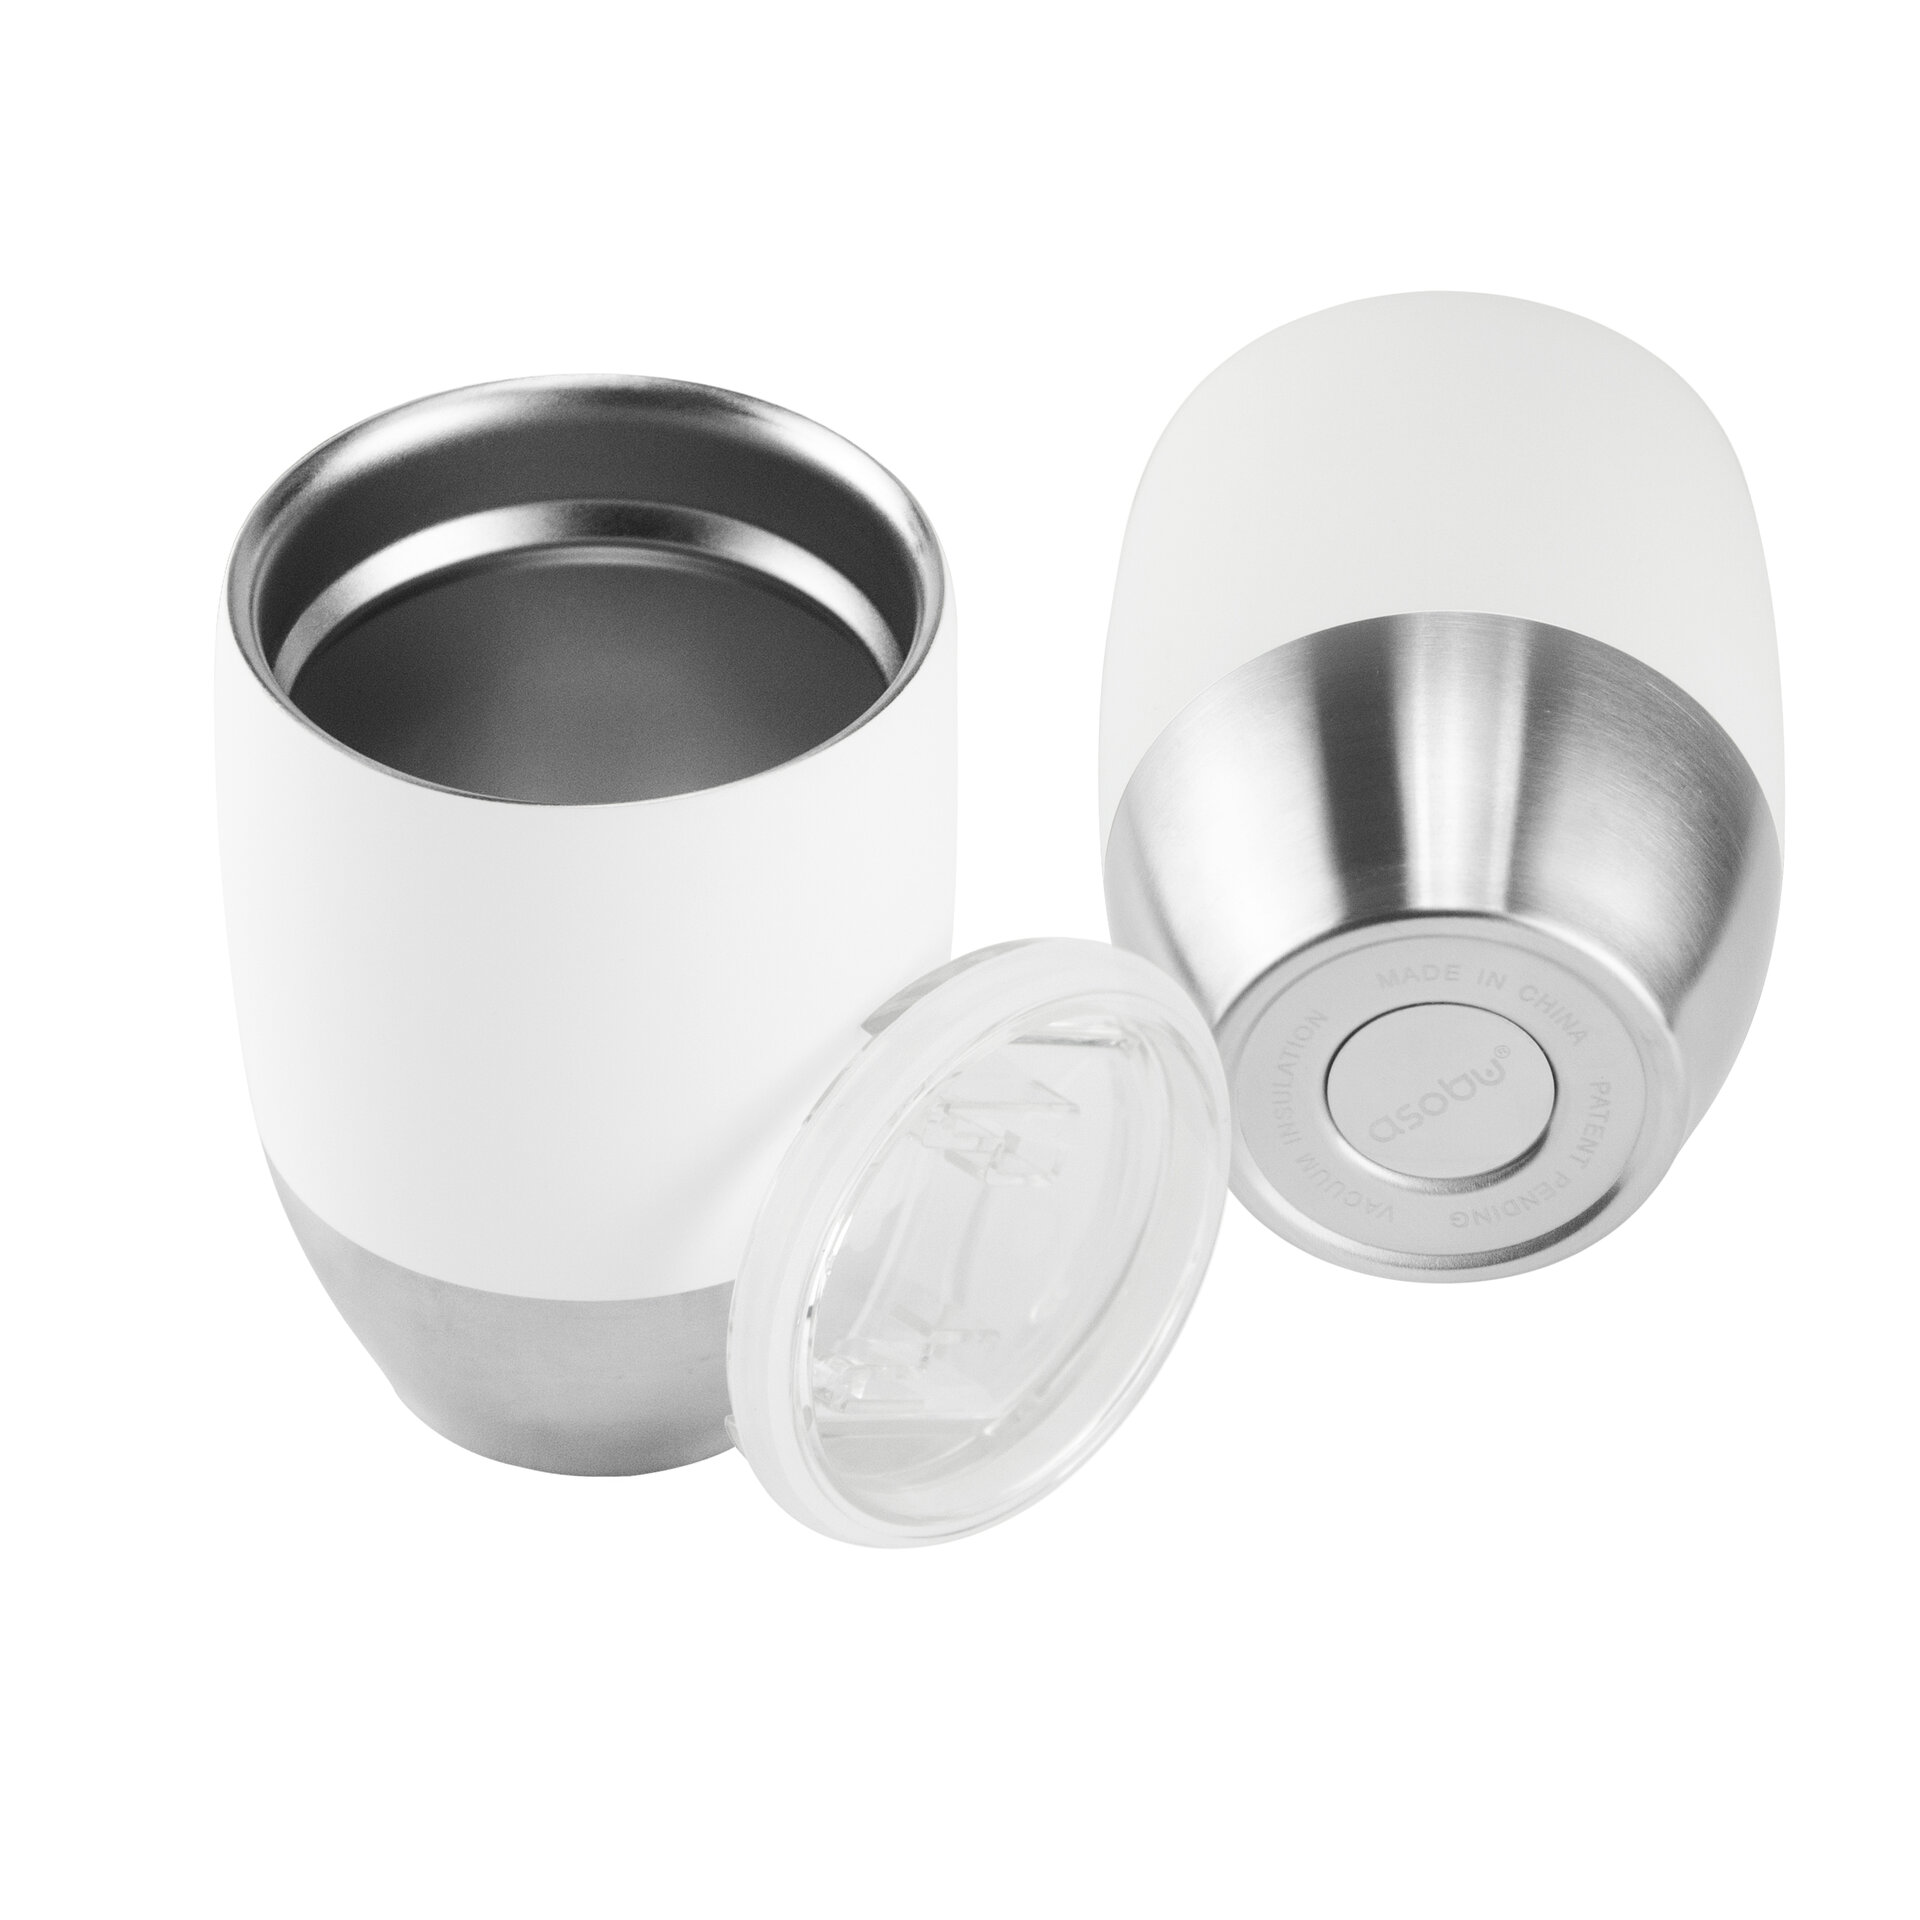 ASOBU  Двустенна термо чаша “IMPERIAL COFFEЕ“ - 300 мл - цвят бял/инокс